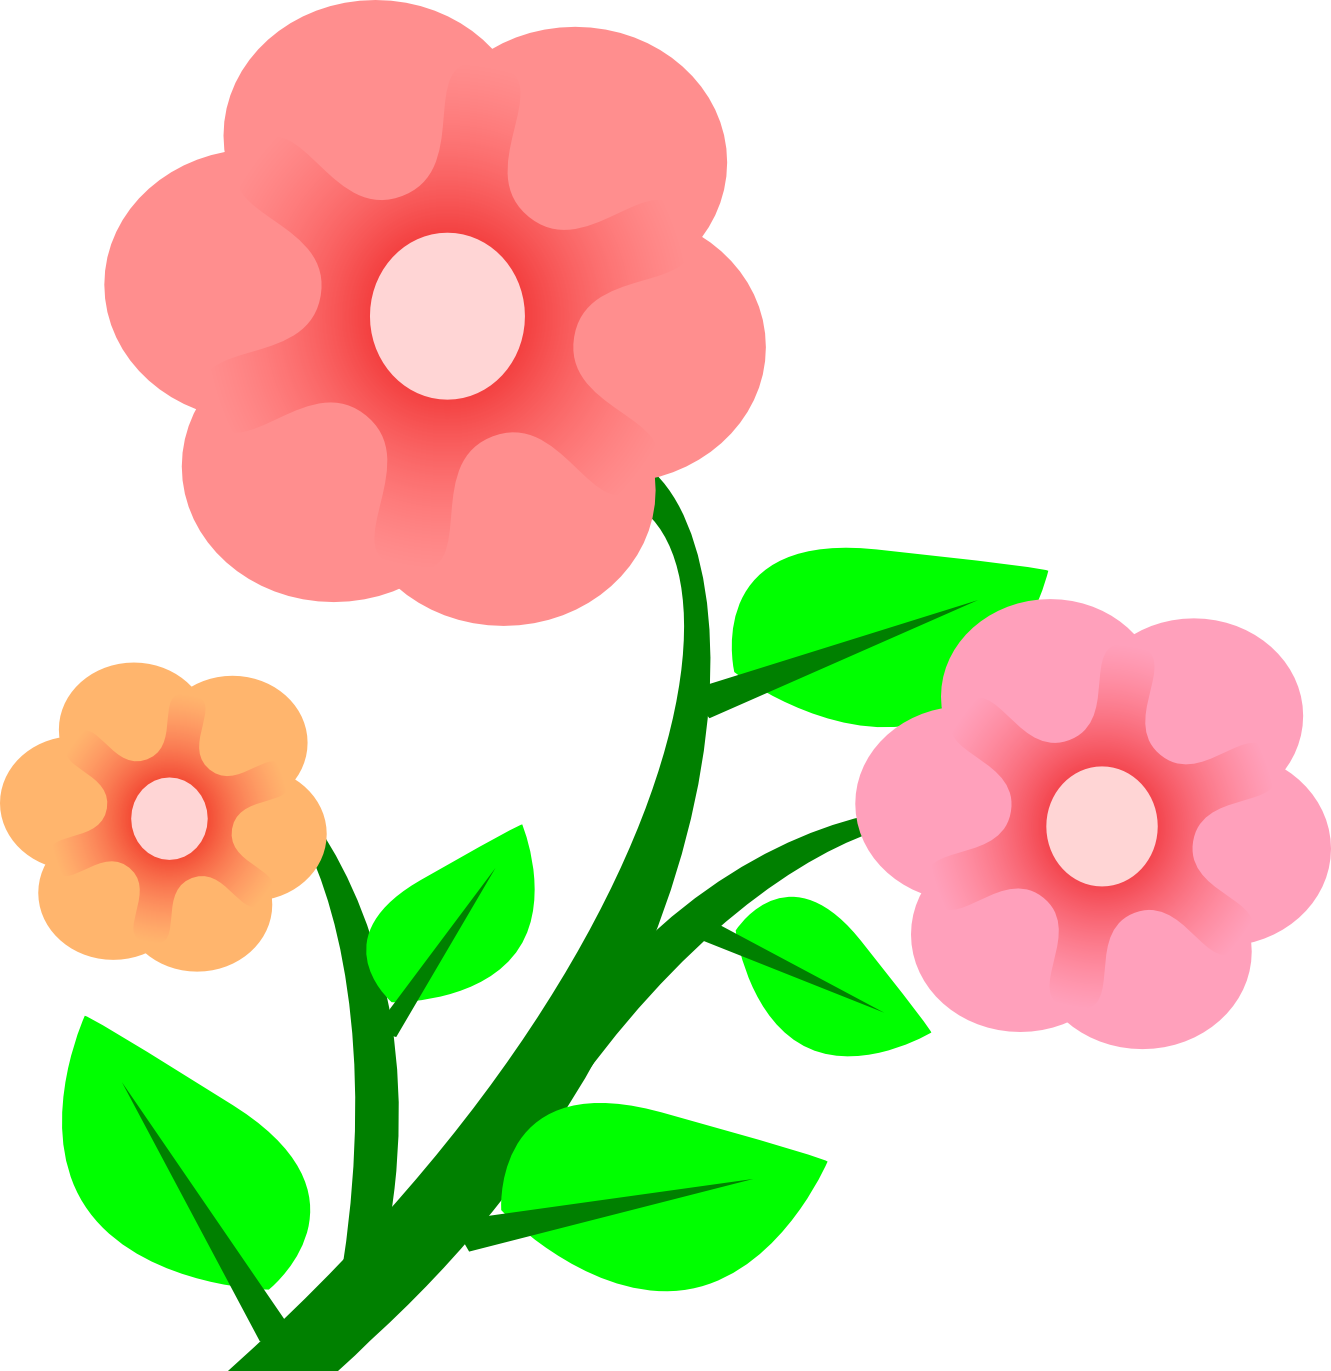 Clip art of flowers